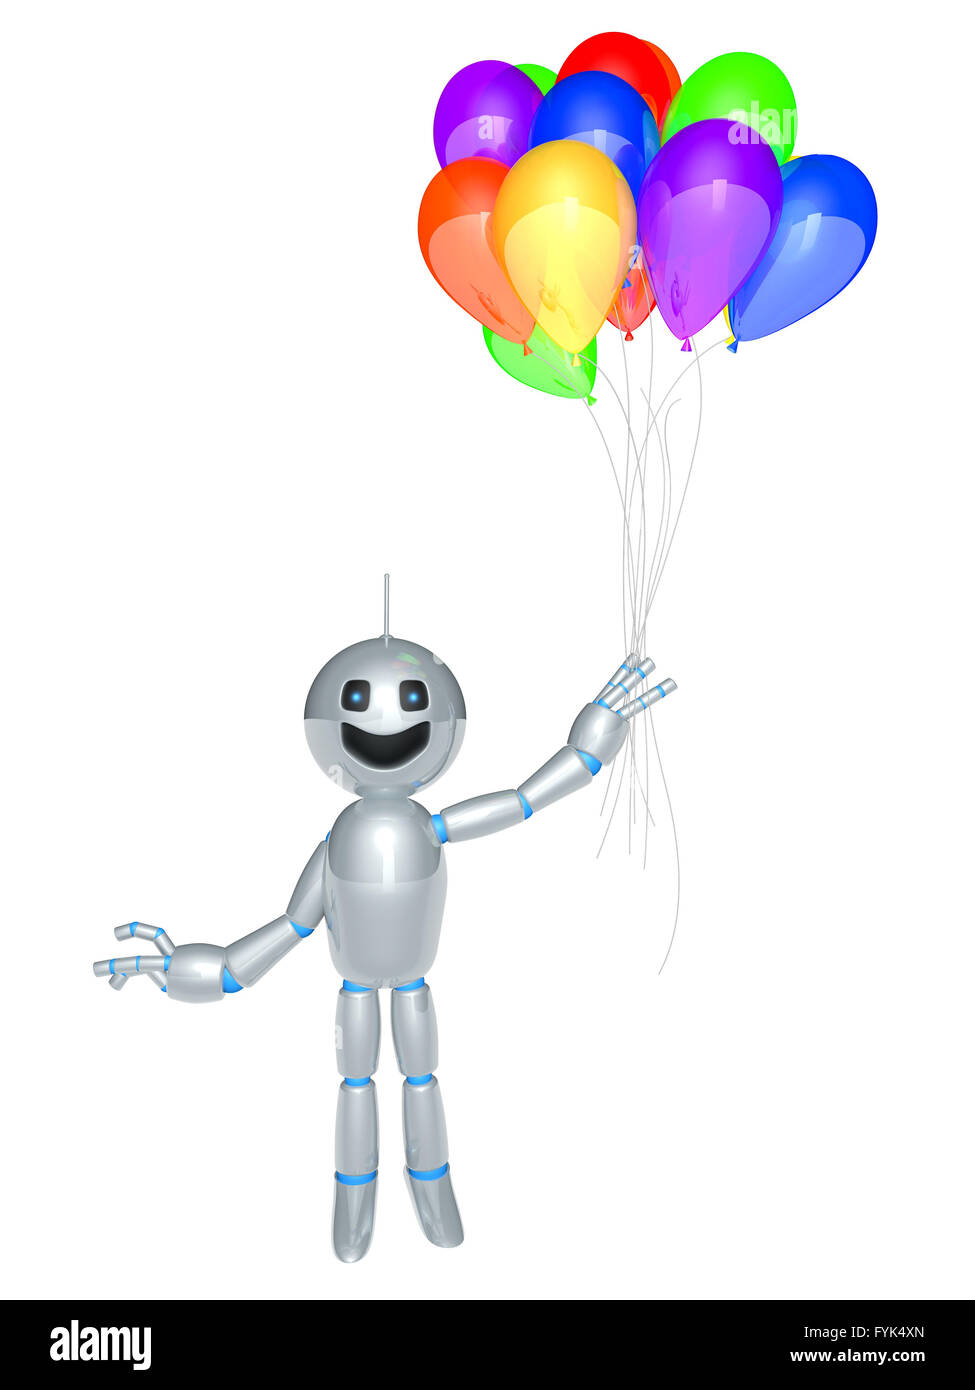 Cartoon Robot with Balloons Stock Photo - Alamy